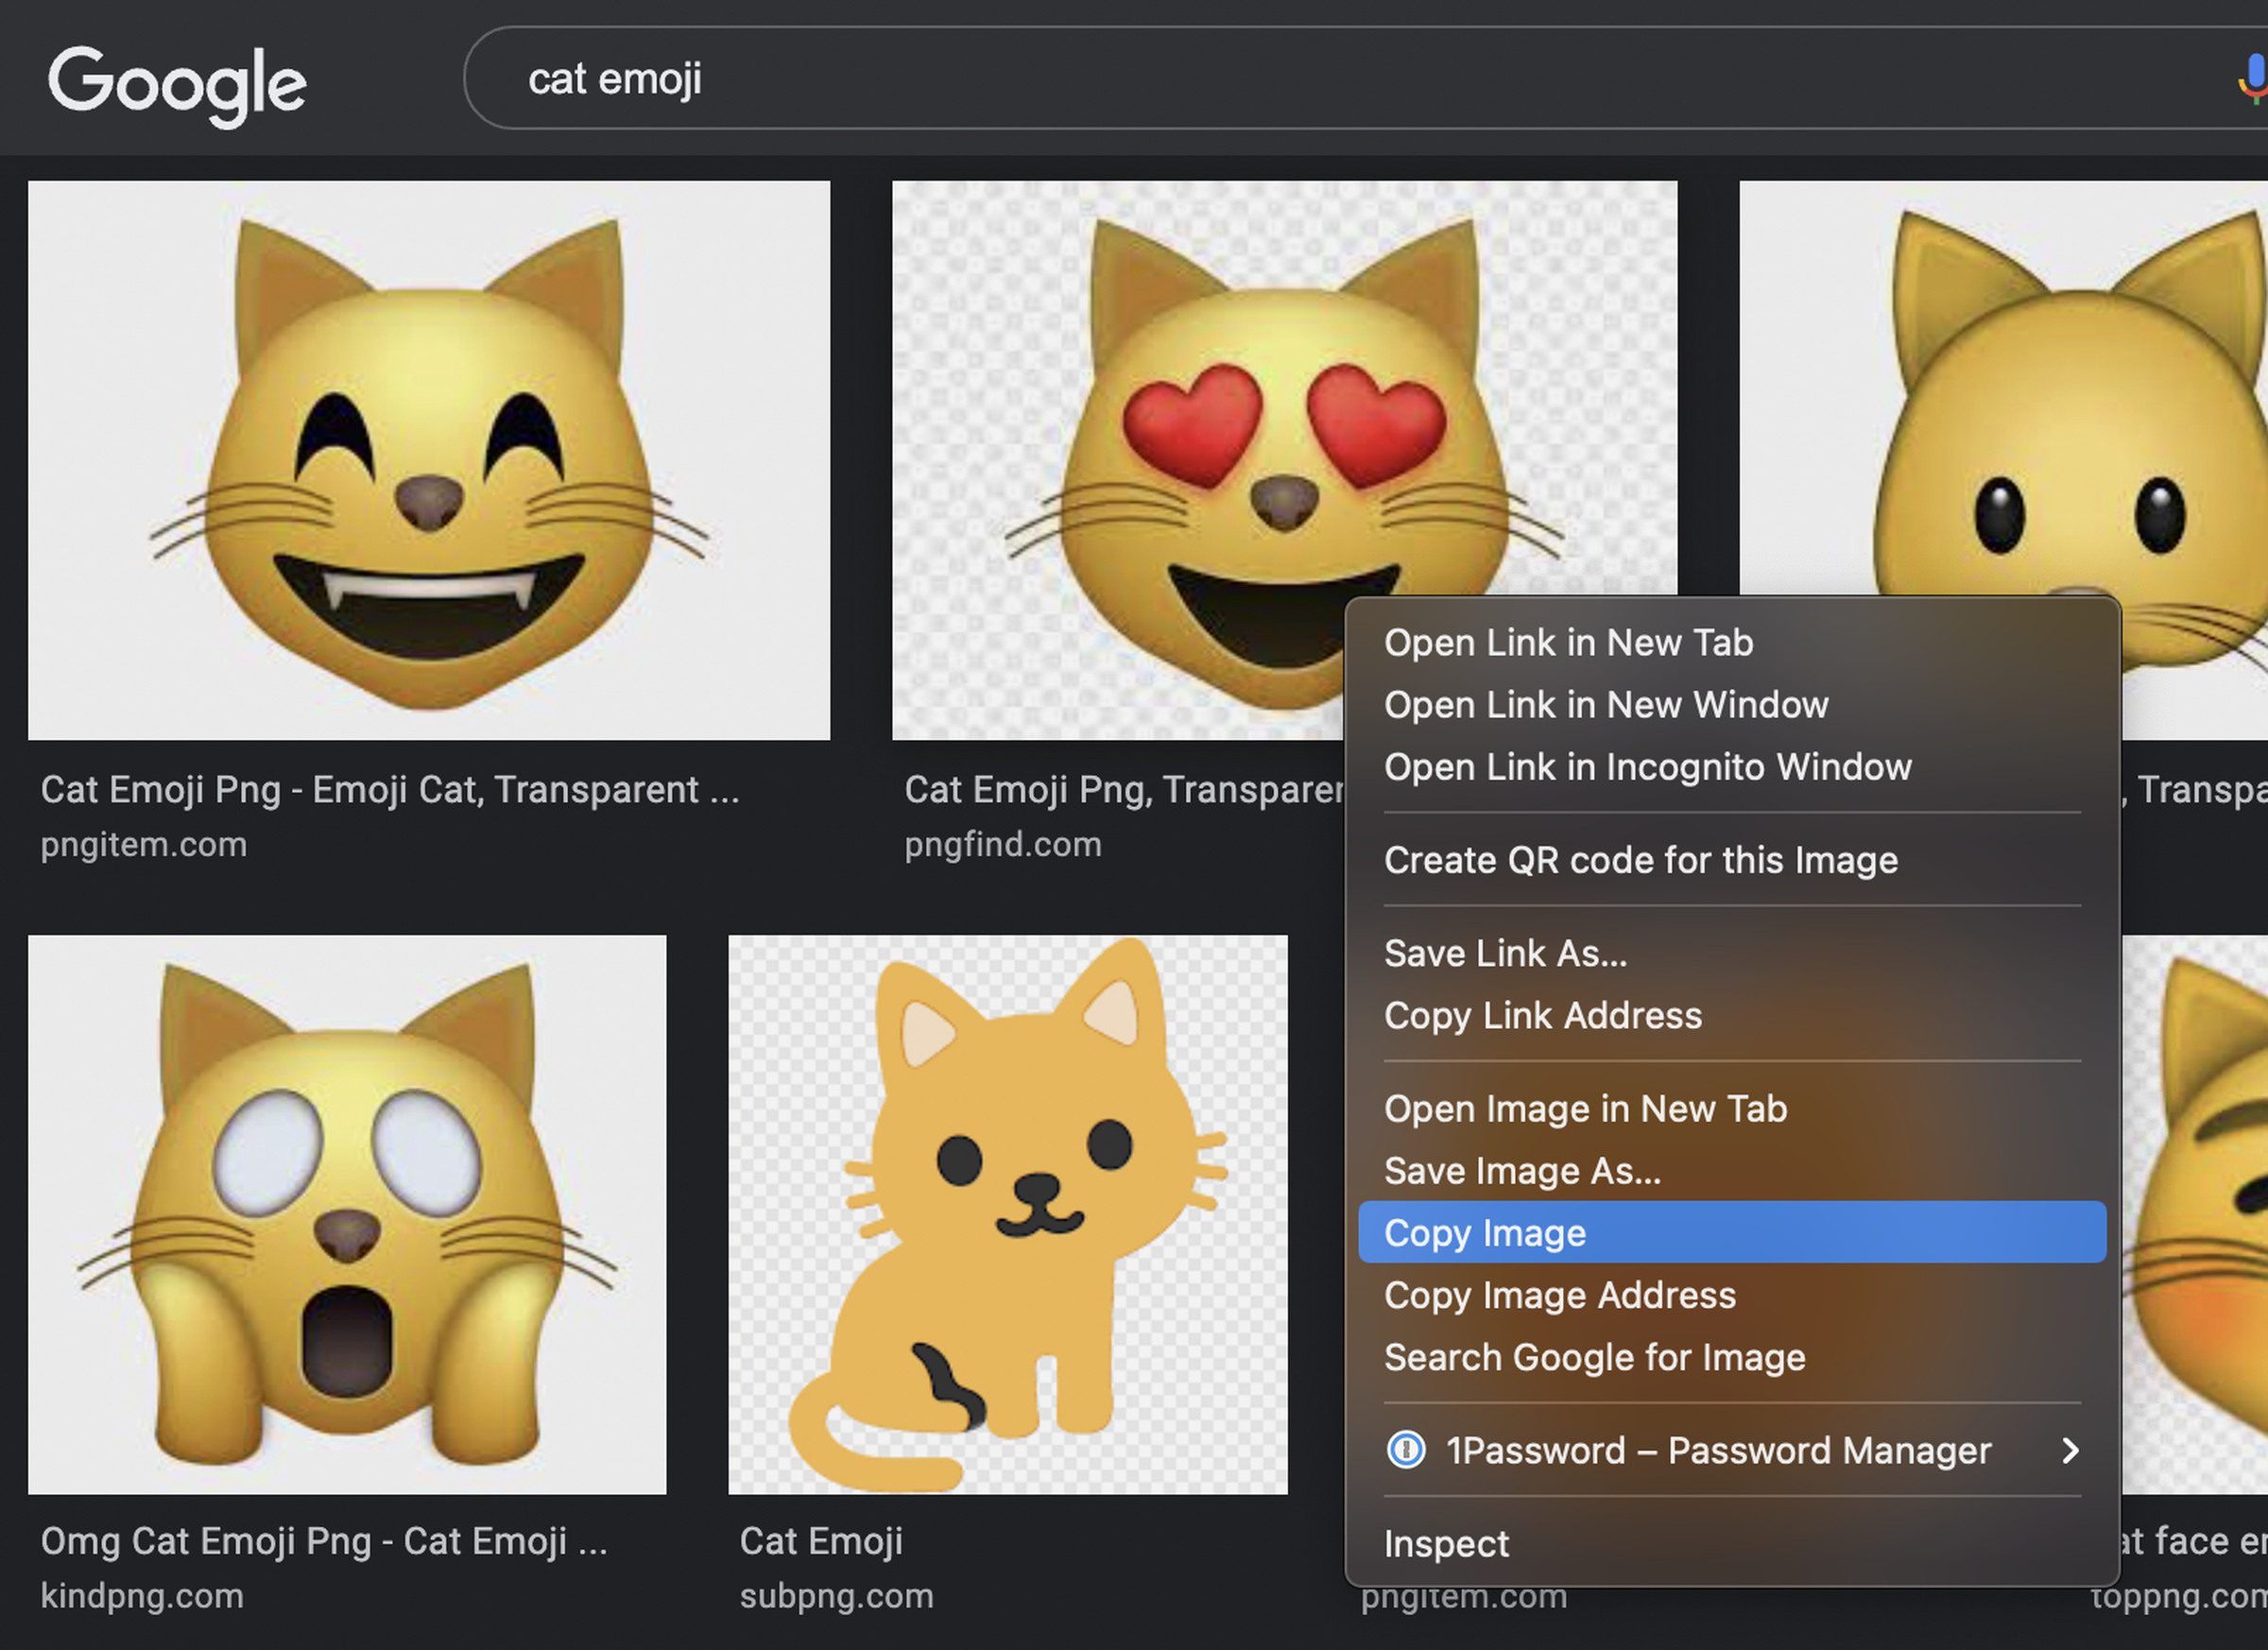 Screenshot of me clicking on “Copy Image” on a menu to save a cat emoji.